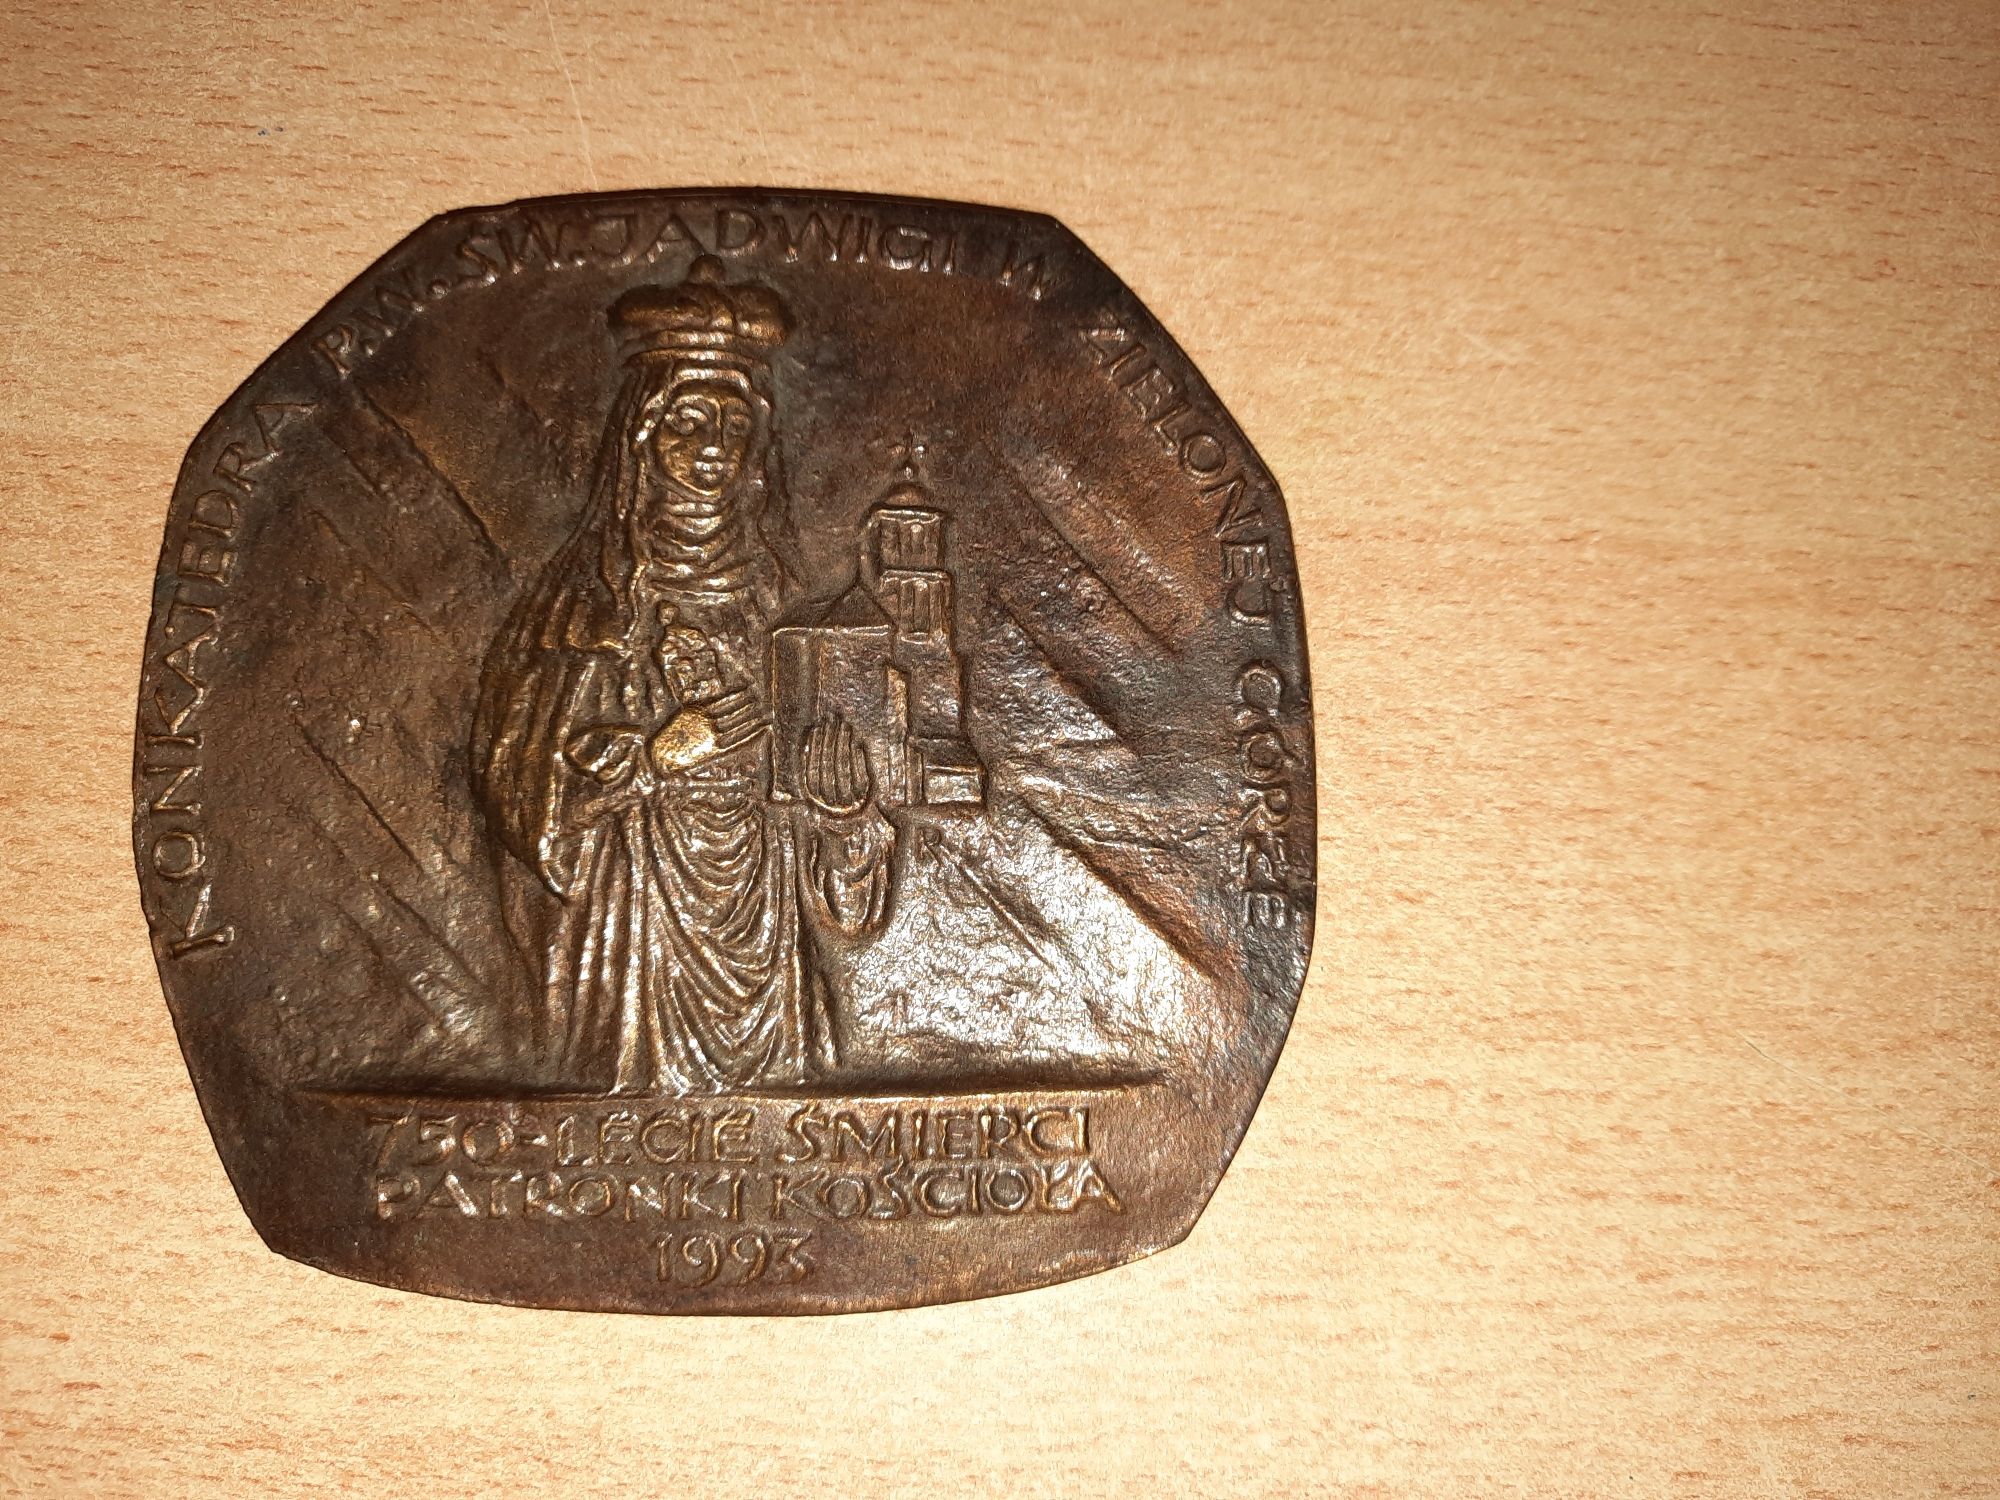 Kontrkatedra Zielonogórska medal pamiątka